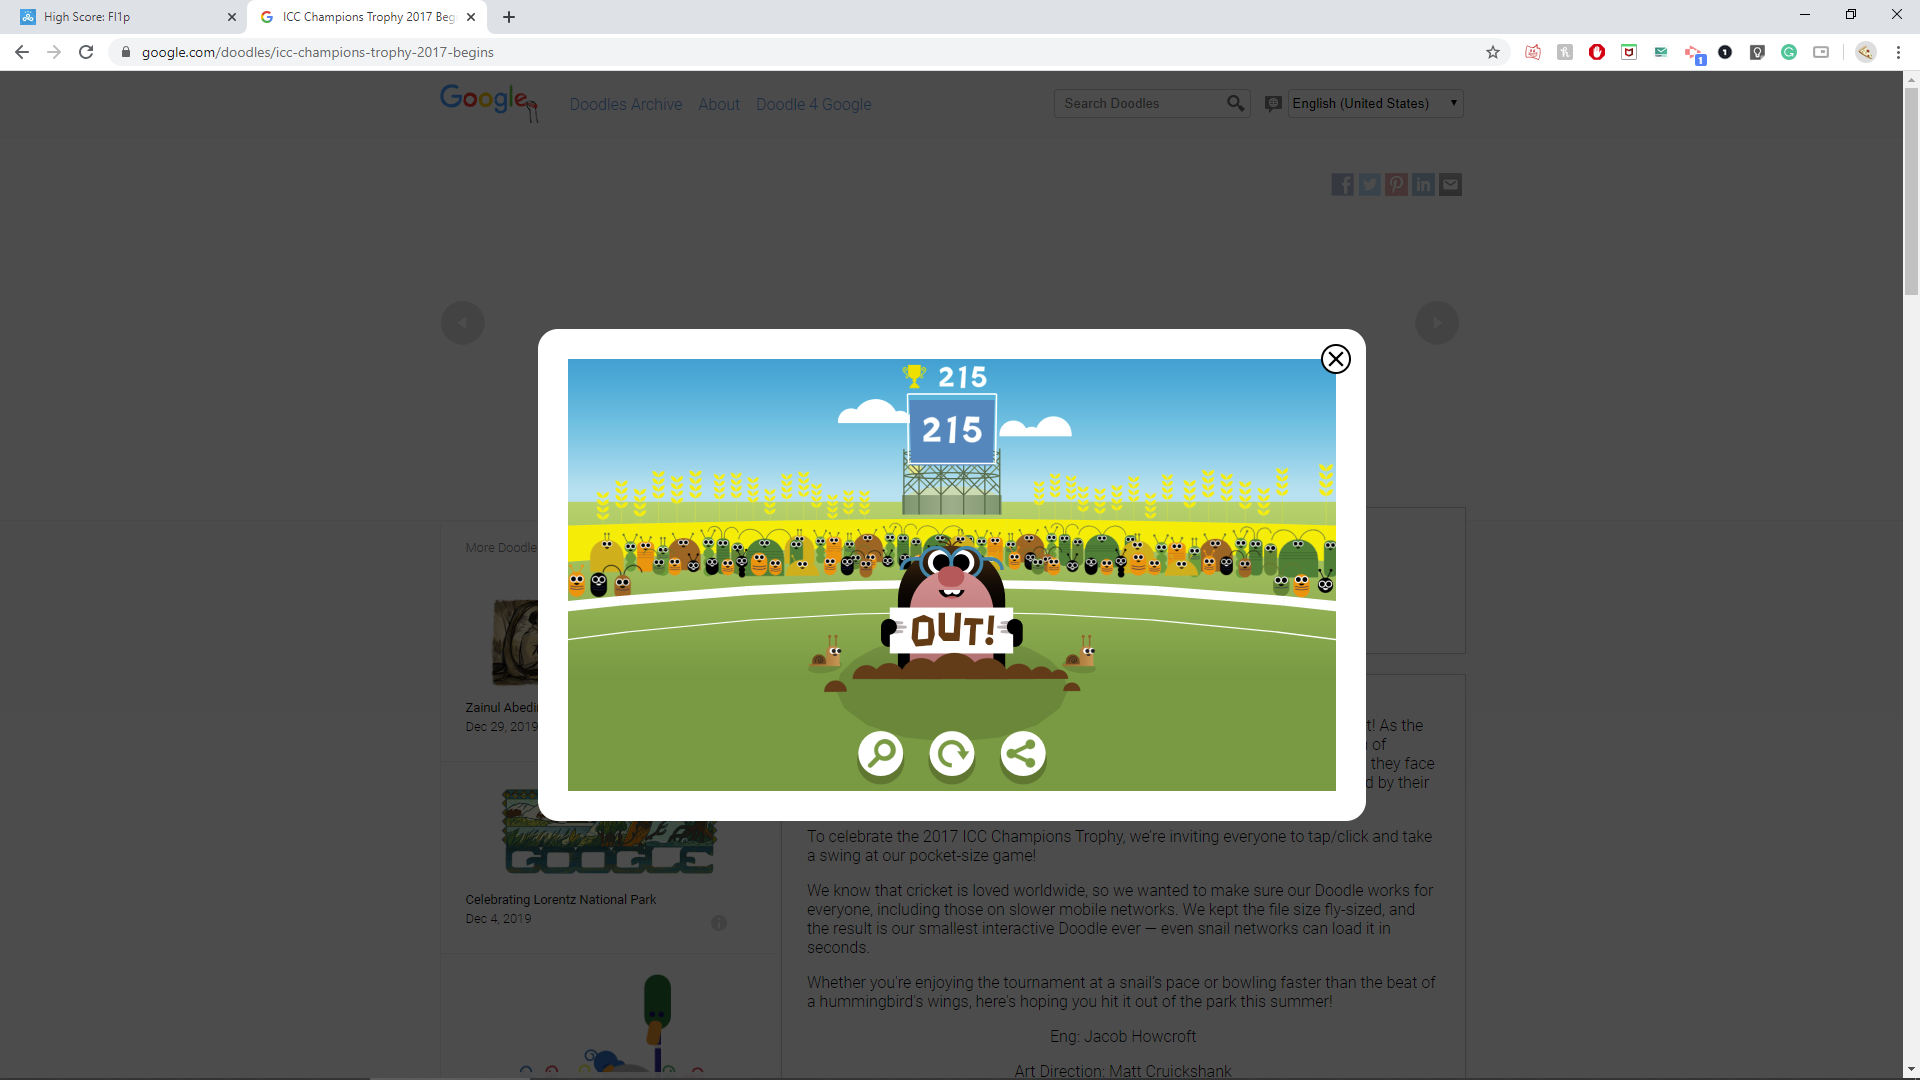 Google Doodle Cricket 215 points